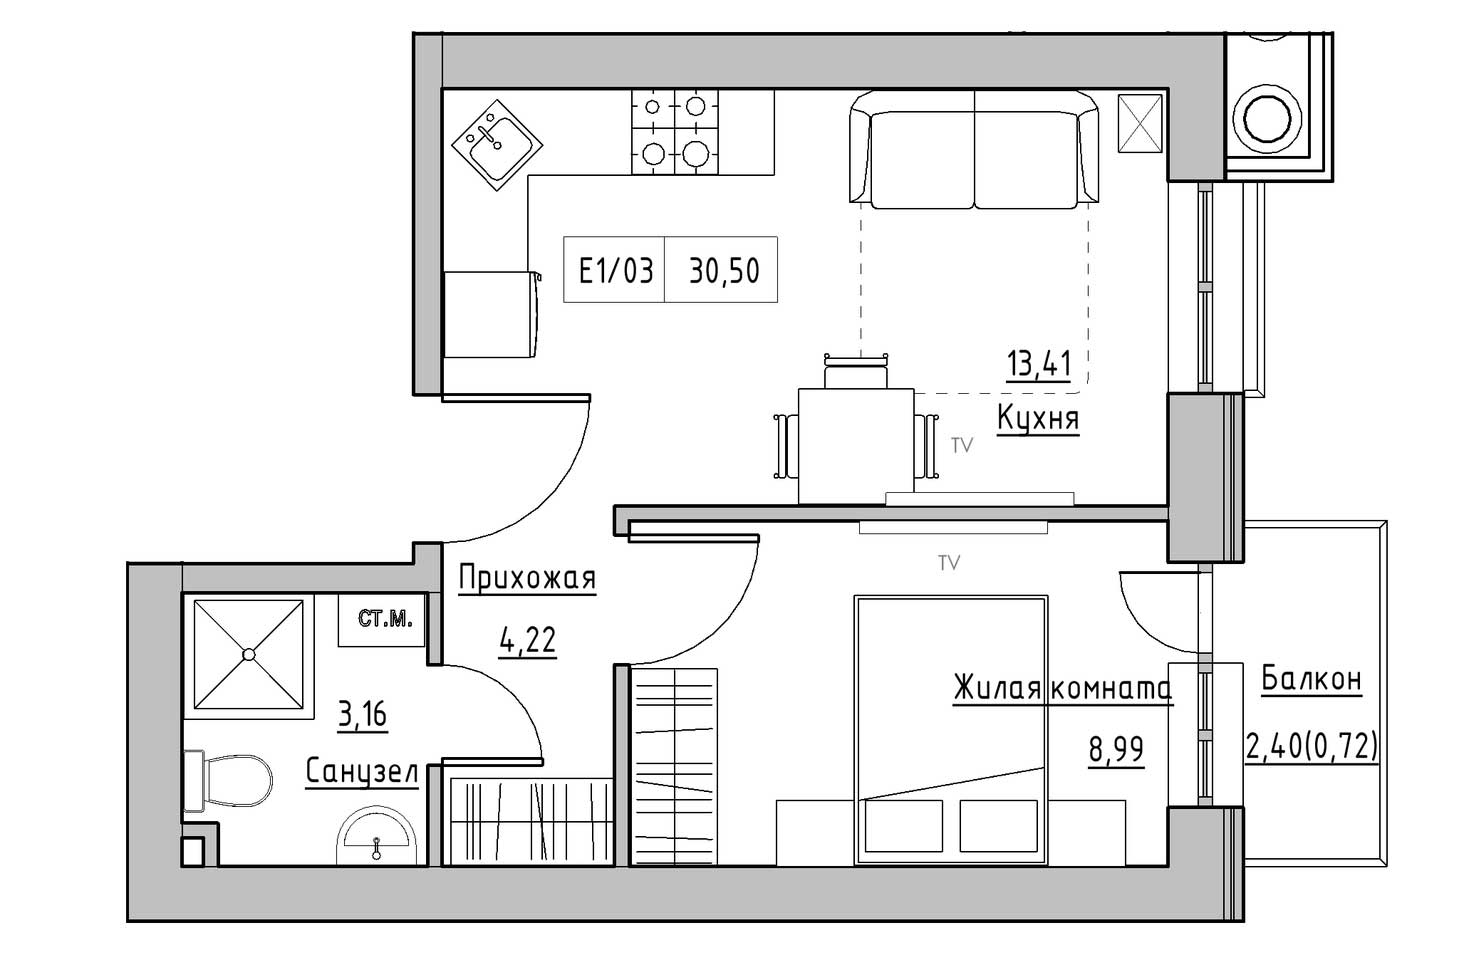 Planning 1-rm flats area 30.5m2, KS-009-04/0002.